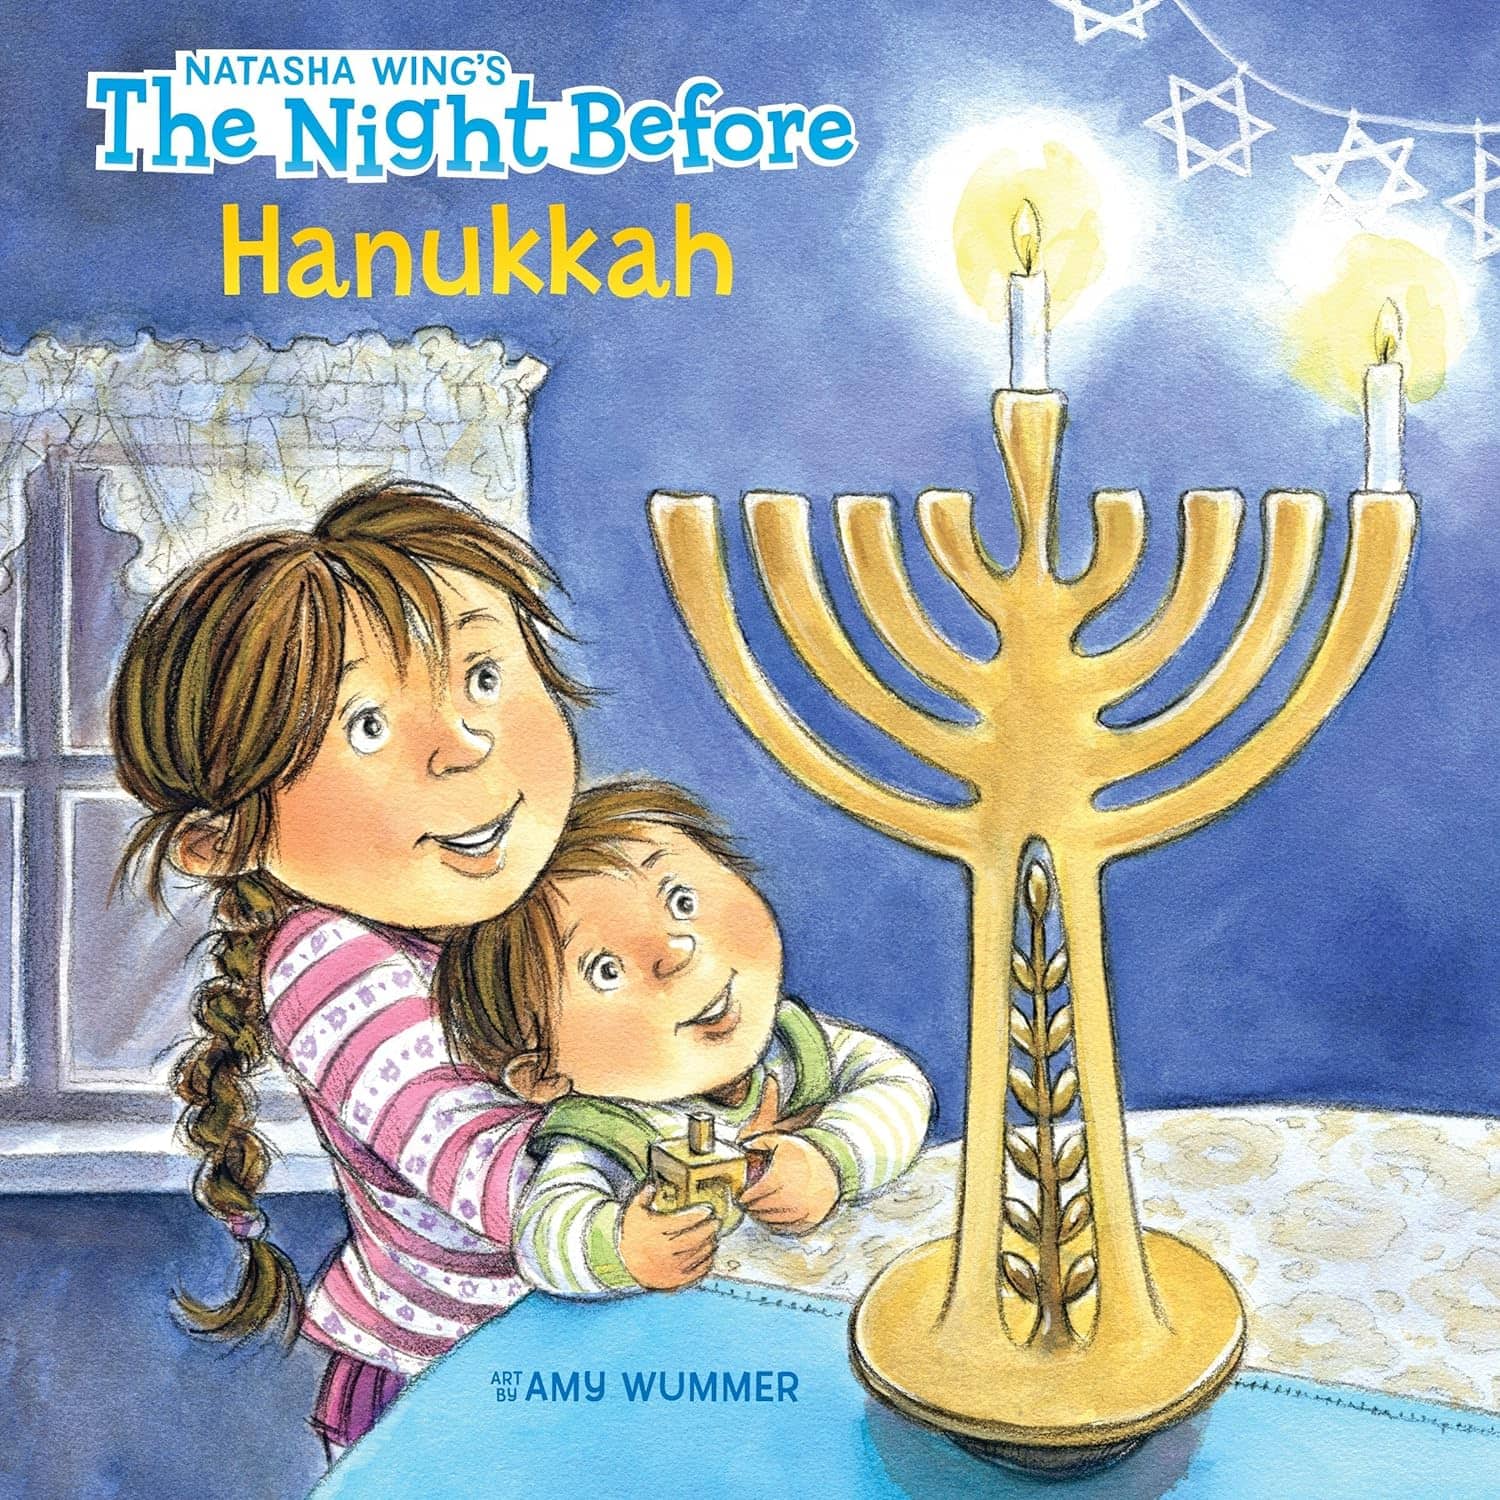 "The Night Before Hanukkah" by Natasha Wing